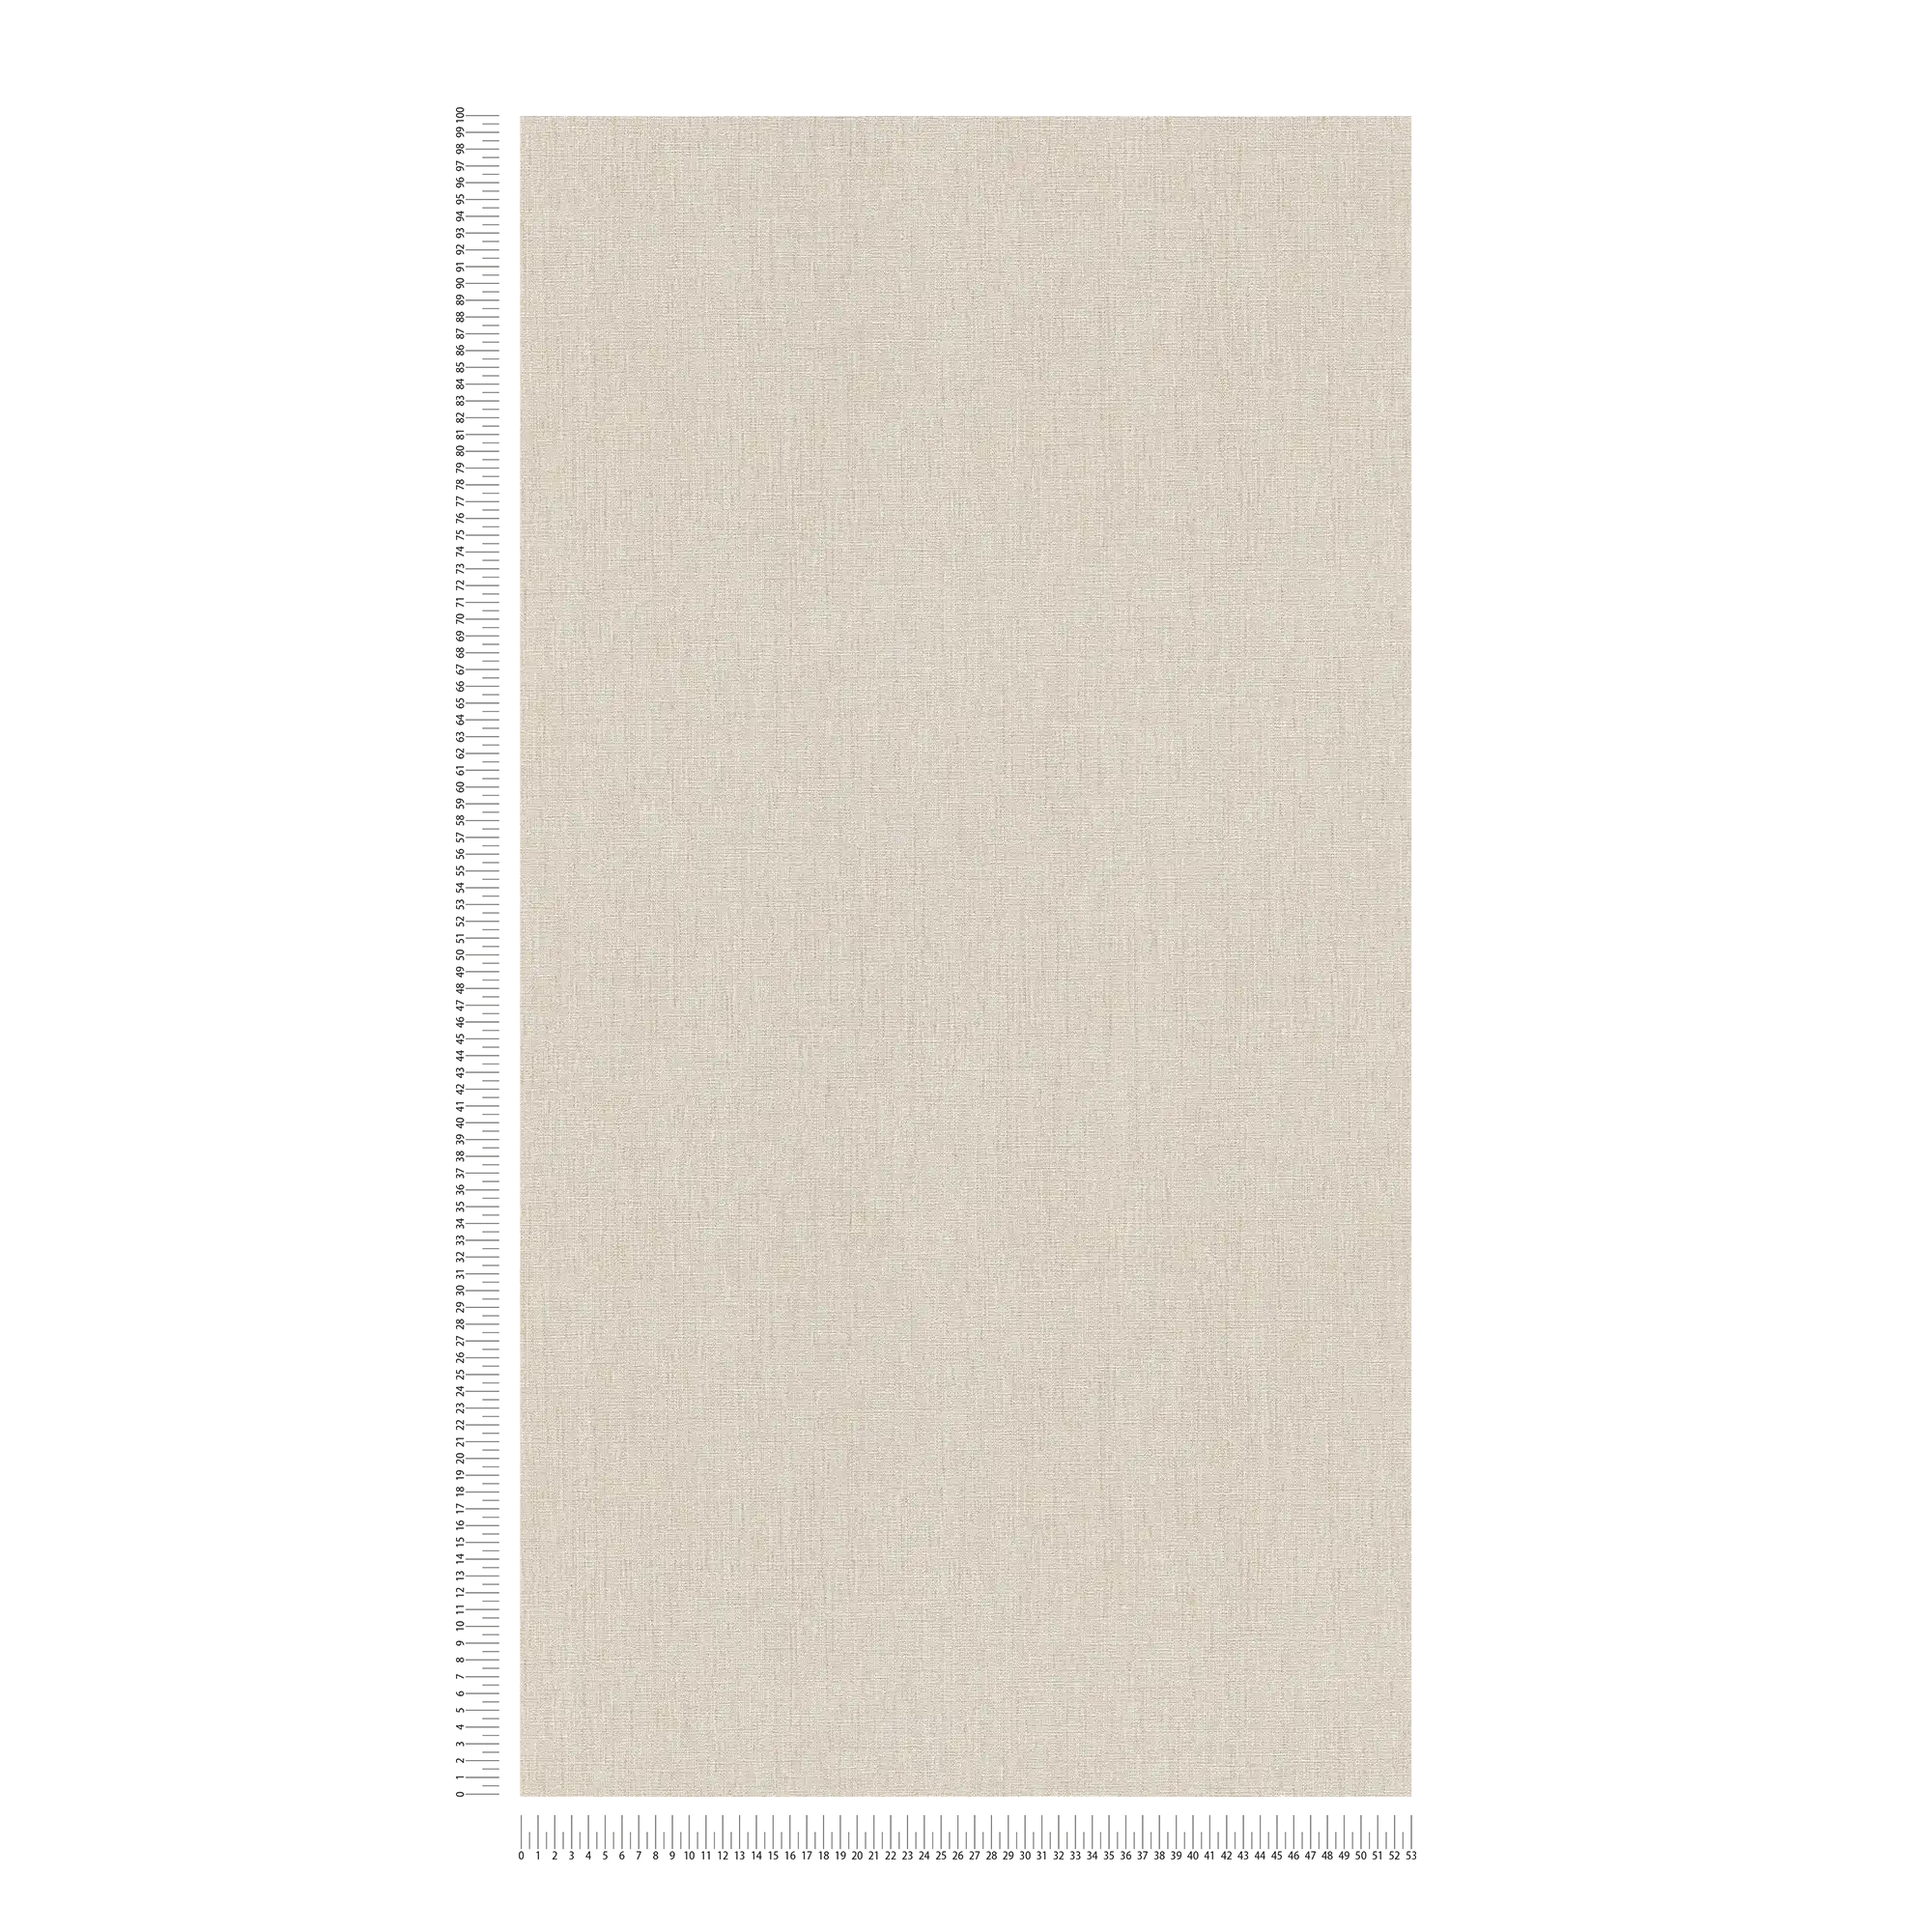             Plain wallpaper in textile look lightly textured - Beige
        